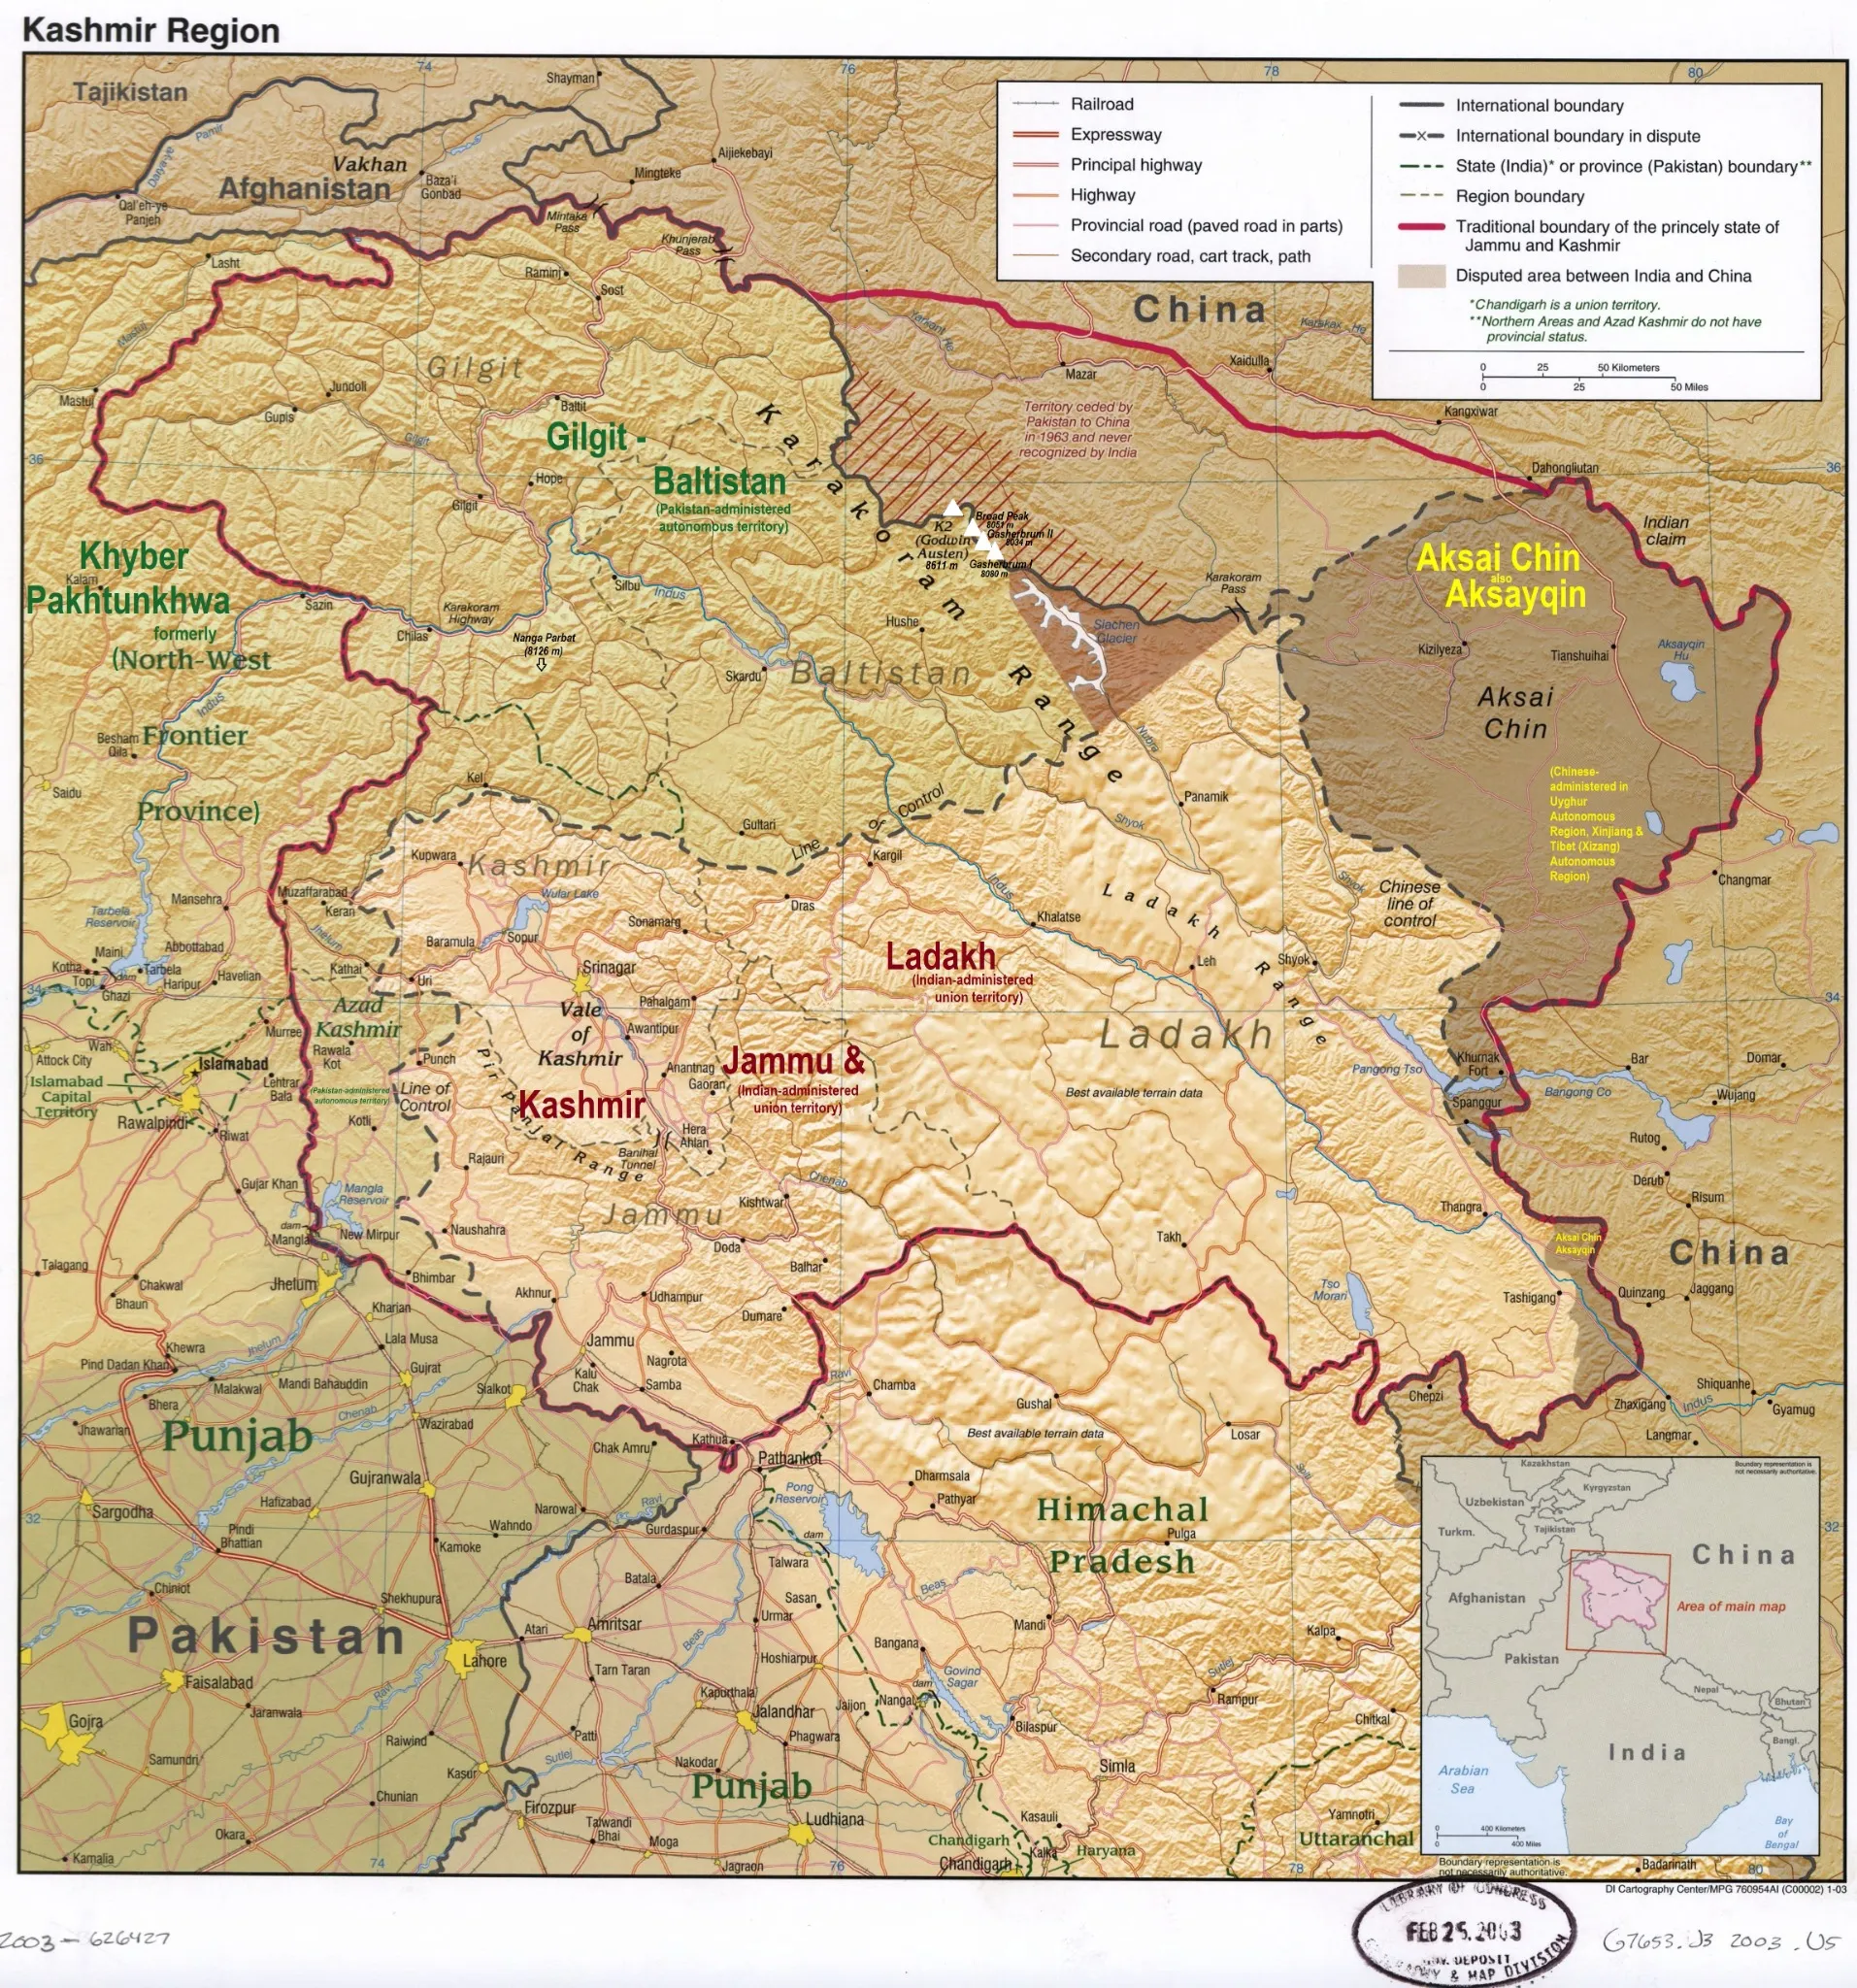 Kashmir, topographical map, Line of Control, international boundaries, Jammu and Kashmir, Ladakh, Gilgit-Baltistan, Aksai Chin, Pakistan, India, China, highways, roads, geographic features, regional map, geopolitical borders, LOC map, expressways, Himalayas, topography.